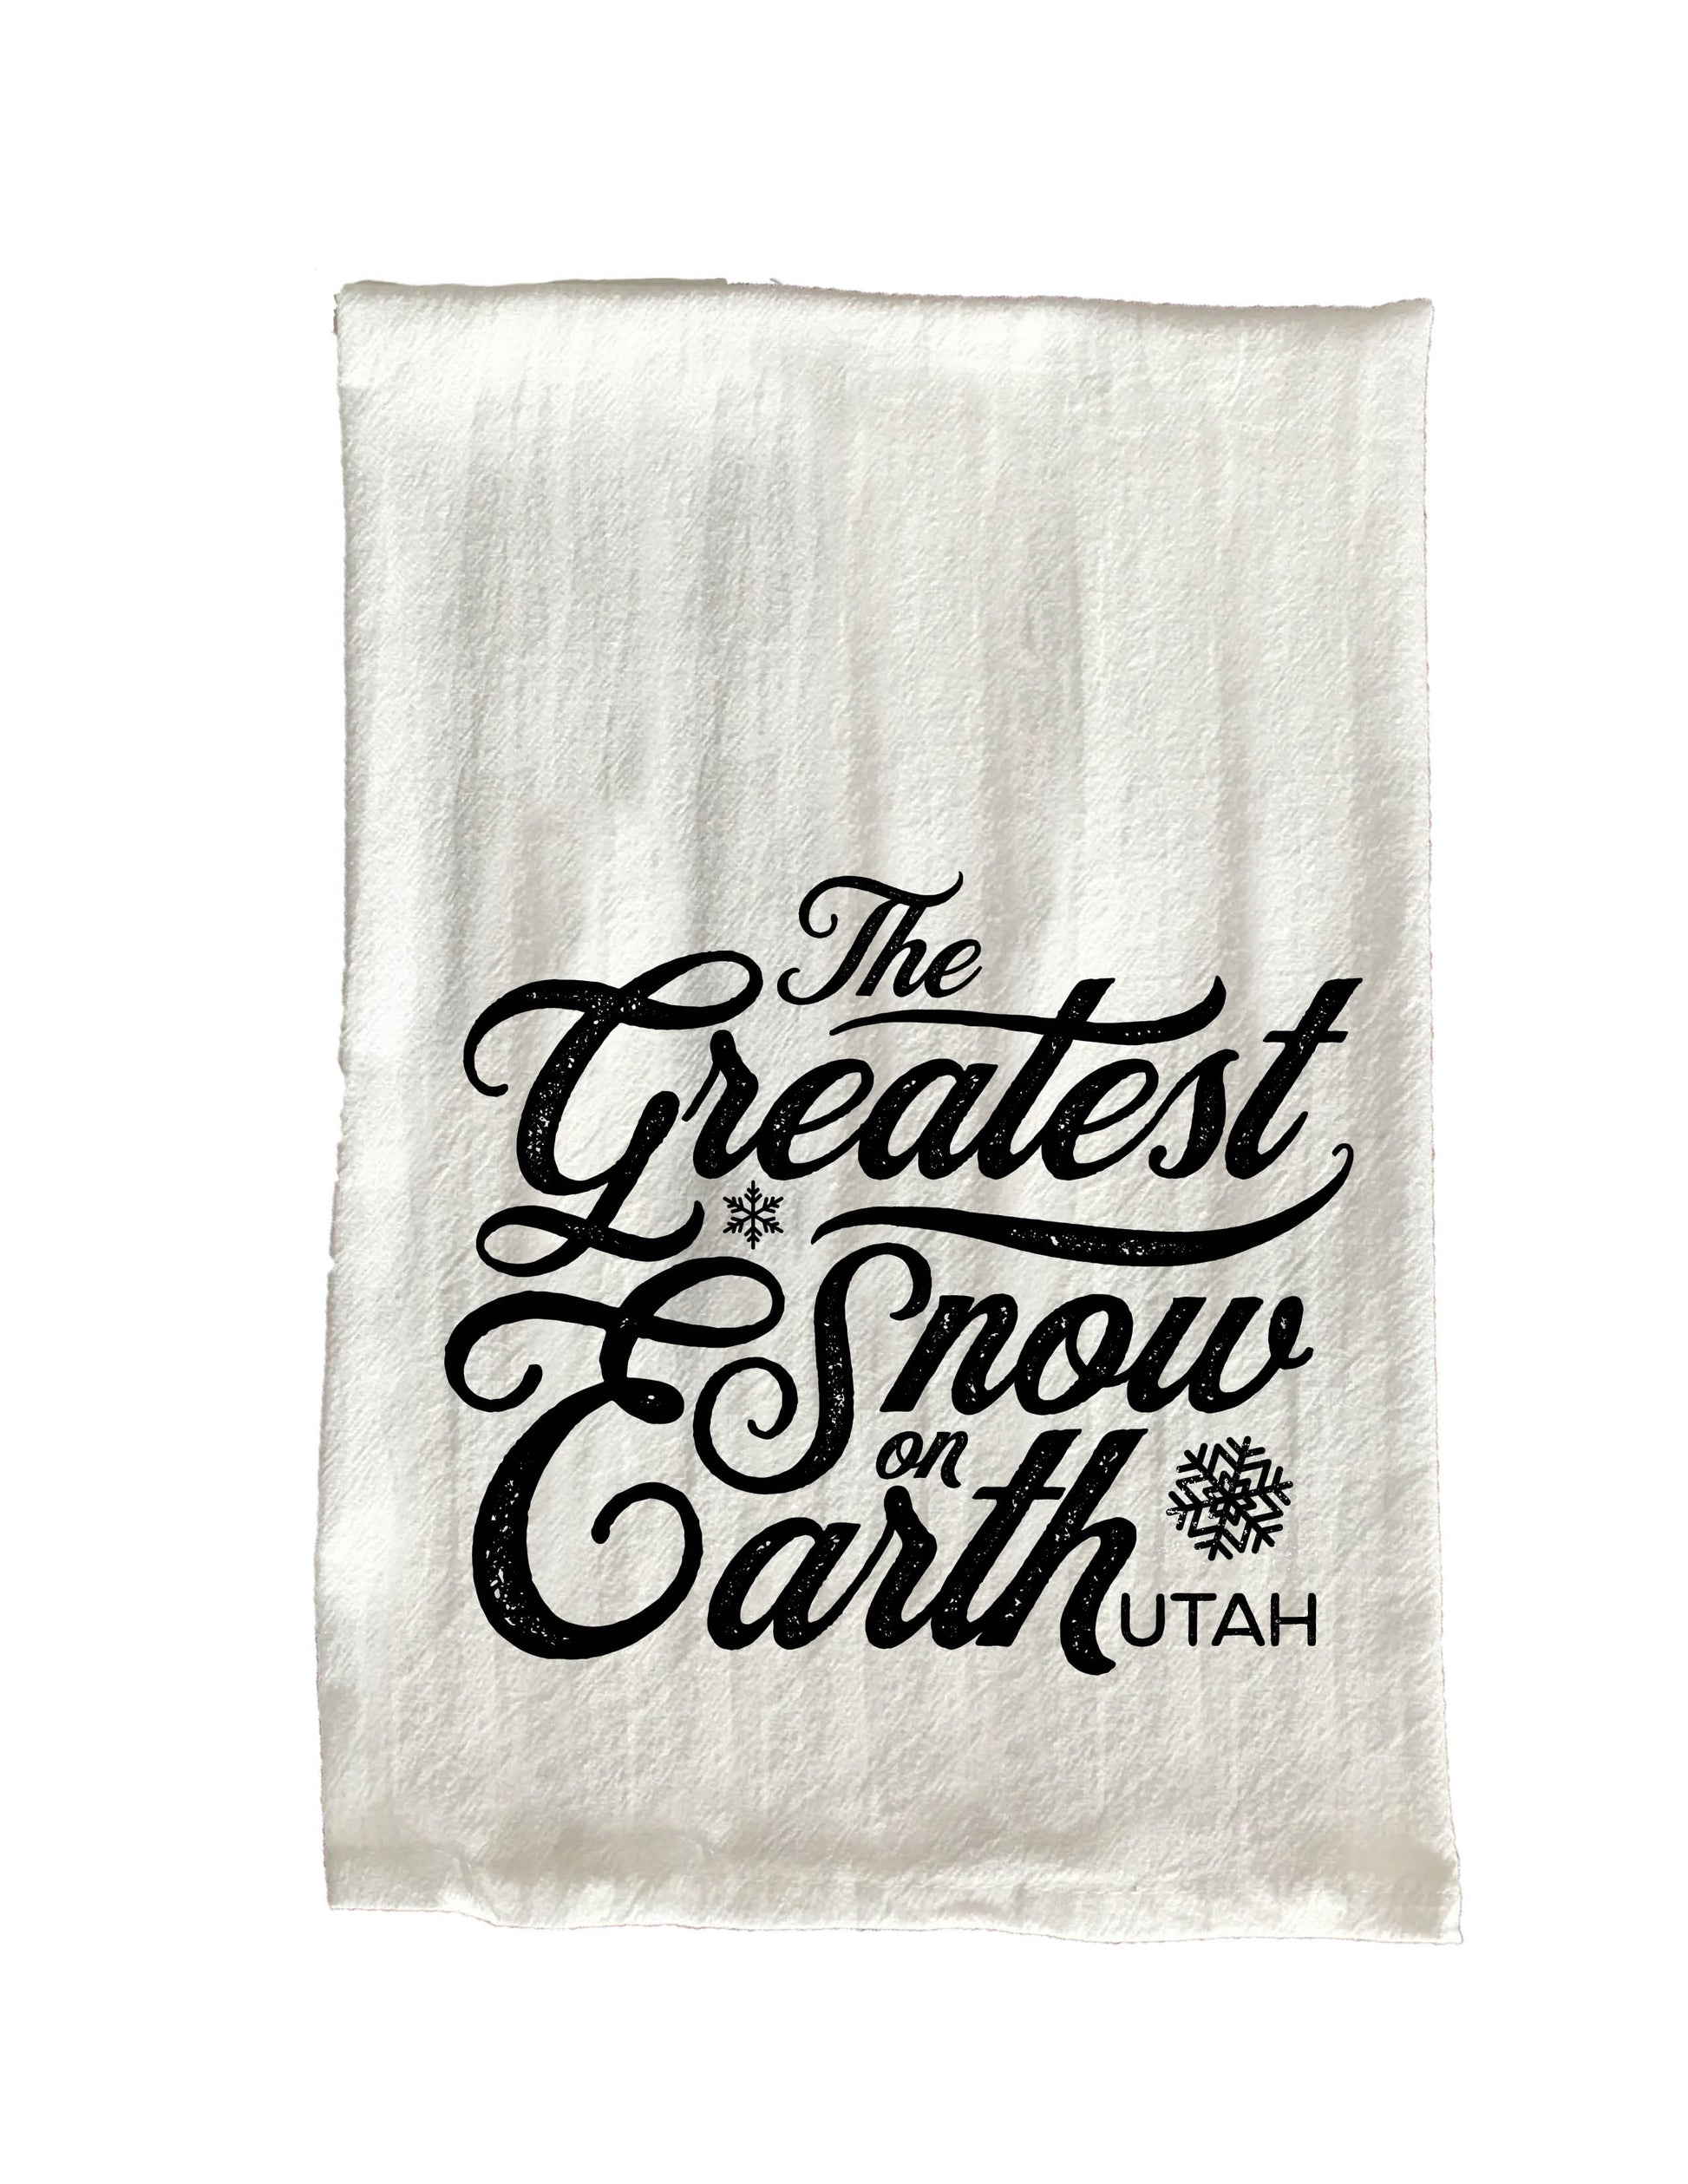 The Greatest Snow on Earth Utah tea towel with snowflakes